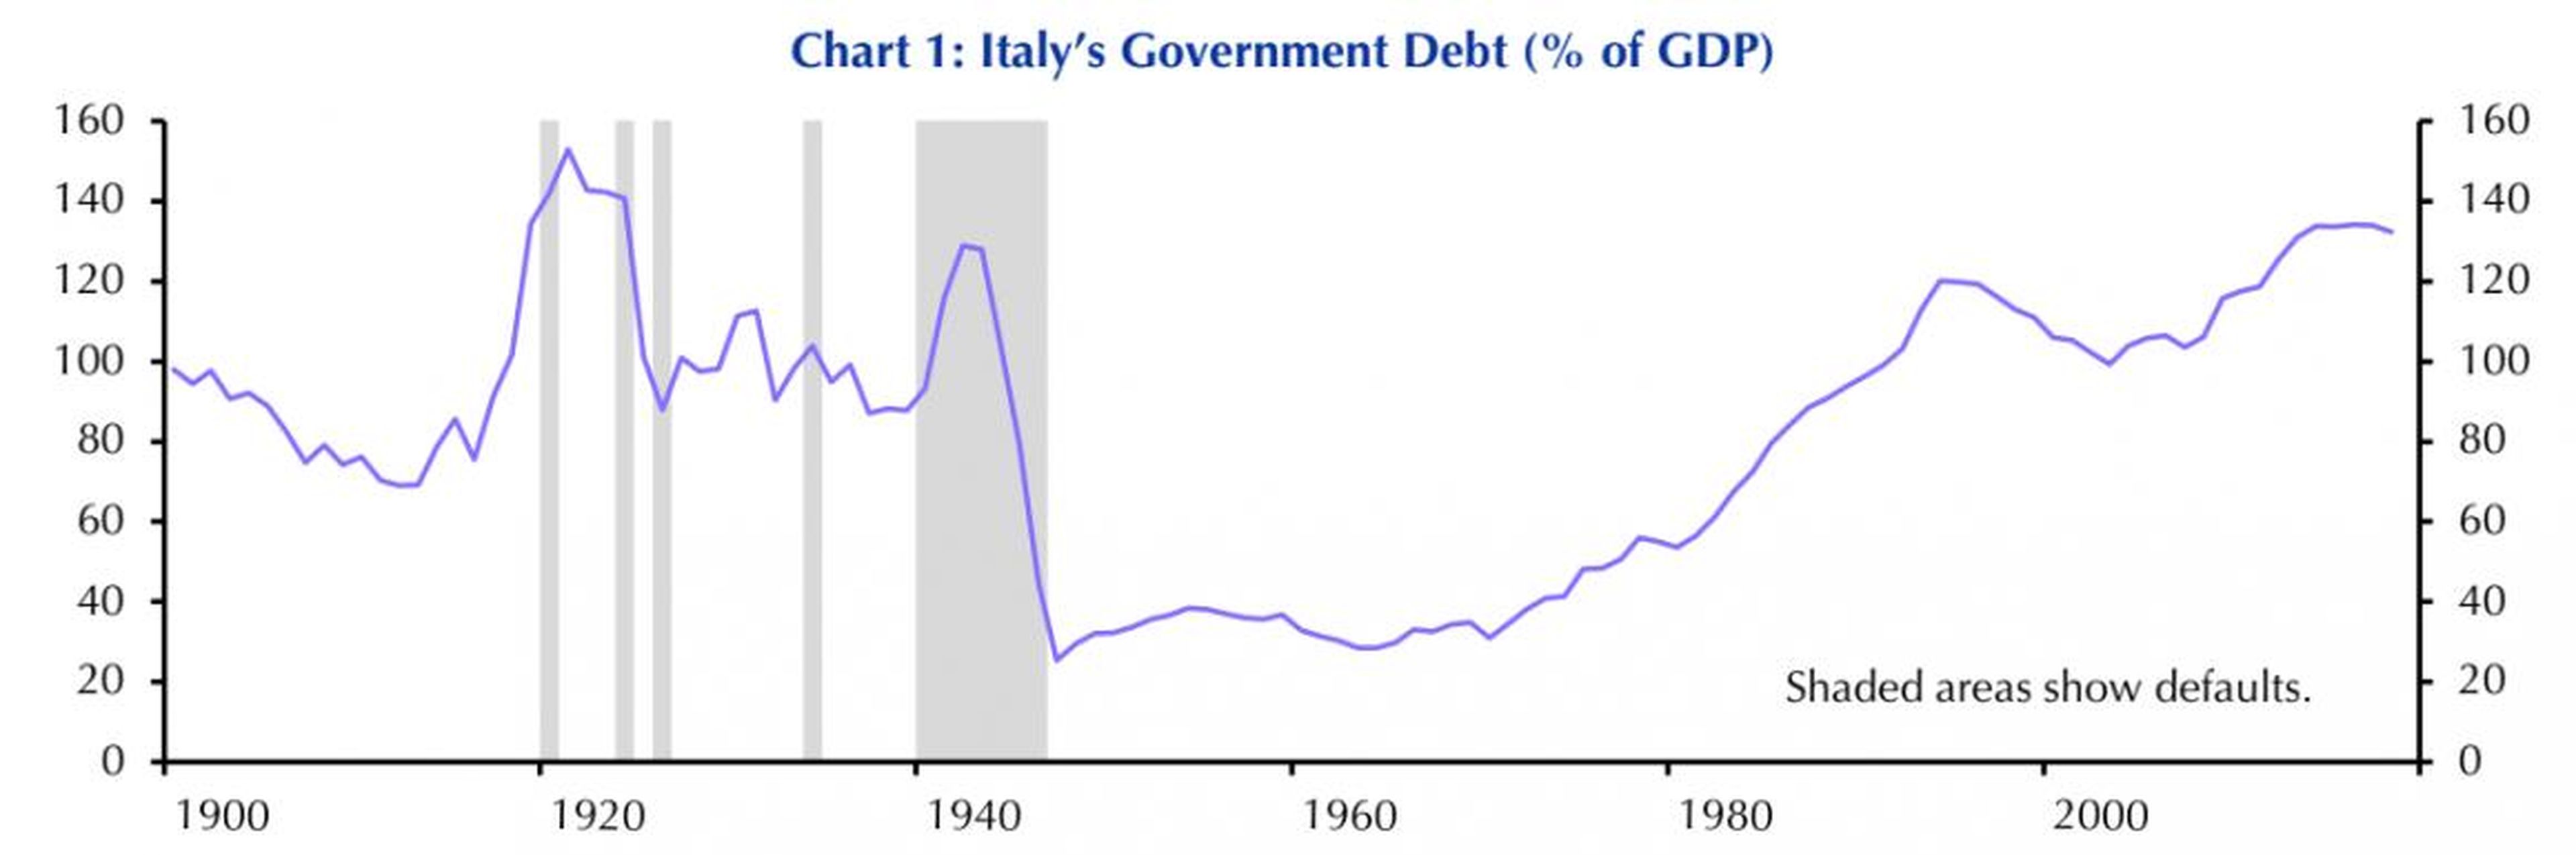 Italian debt just keeps rising